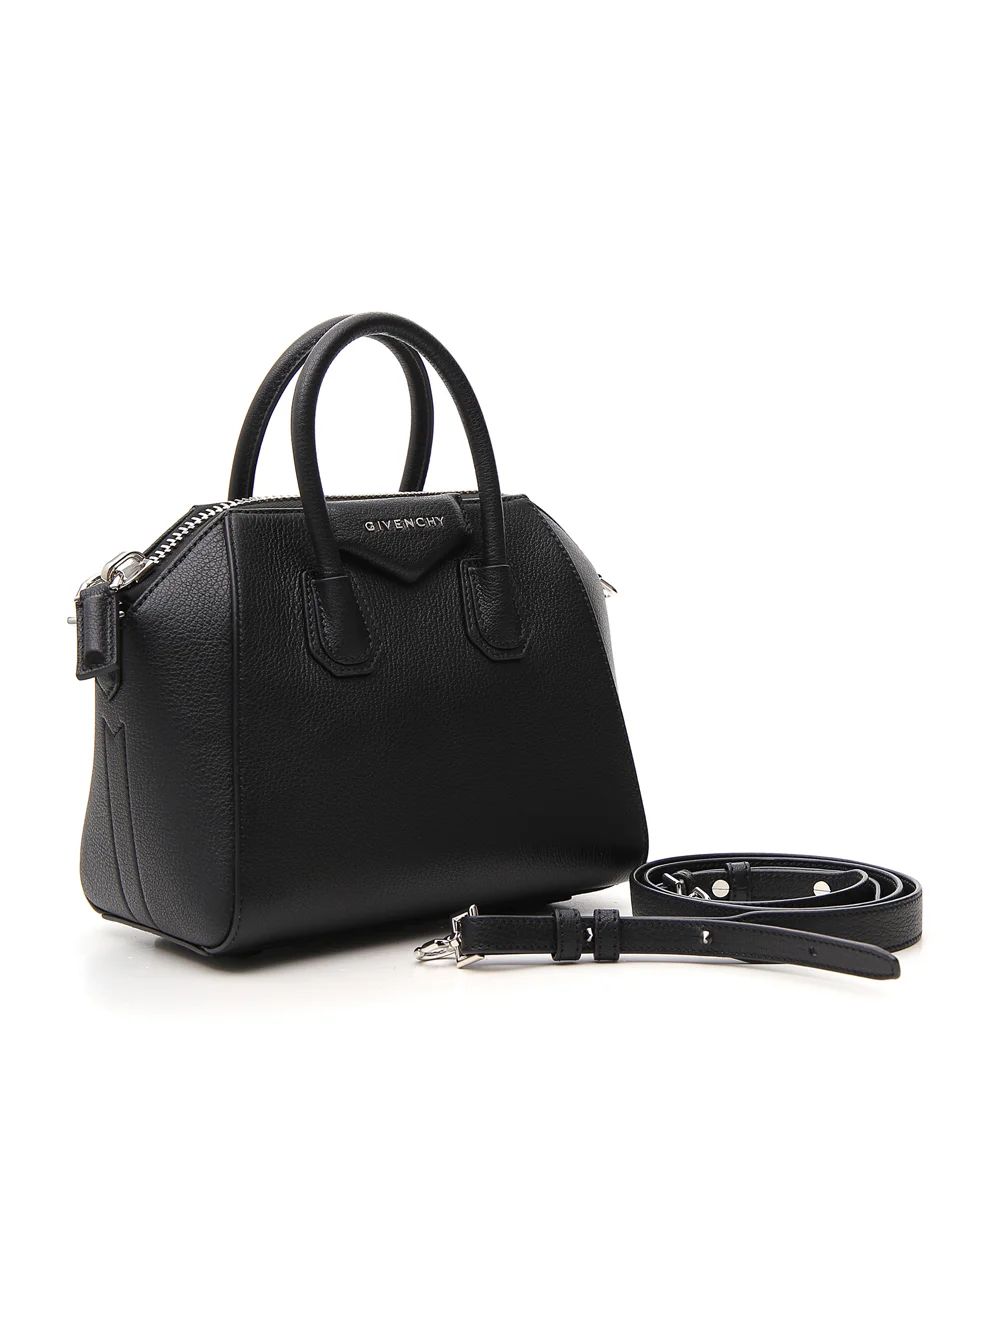 Givenchy Antigona Mini Tote Bag | Cettire Global